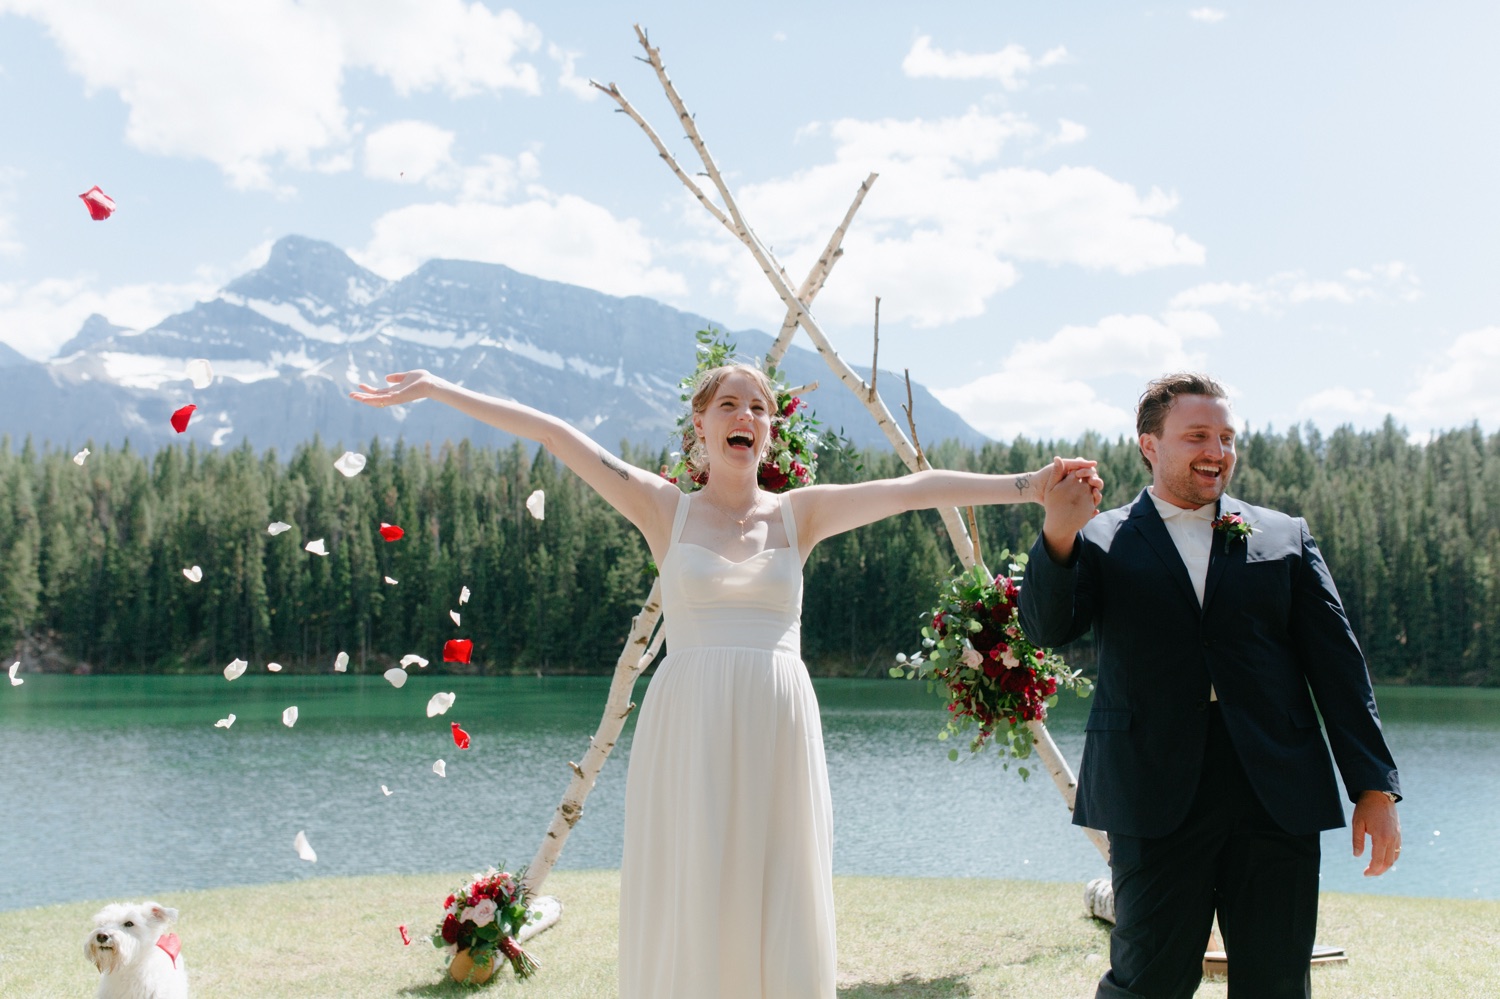 Rose petal ceremony exit at a Johnson Lake wedding